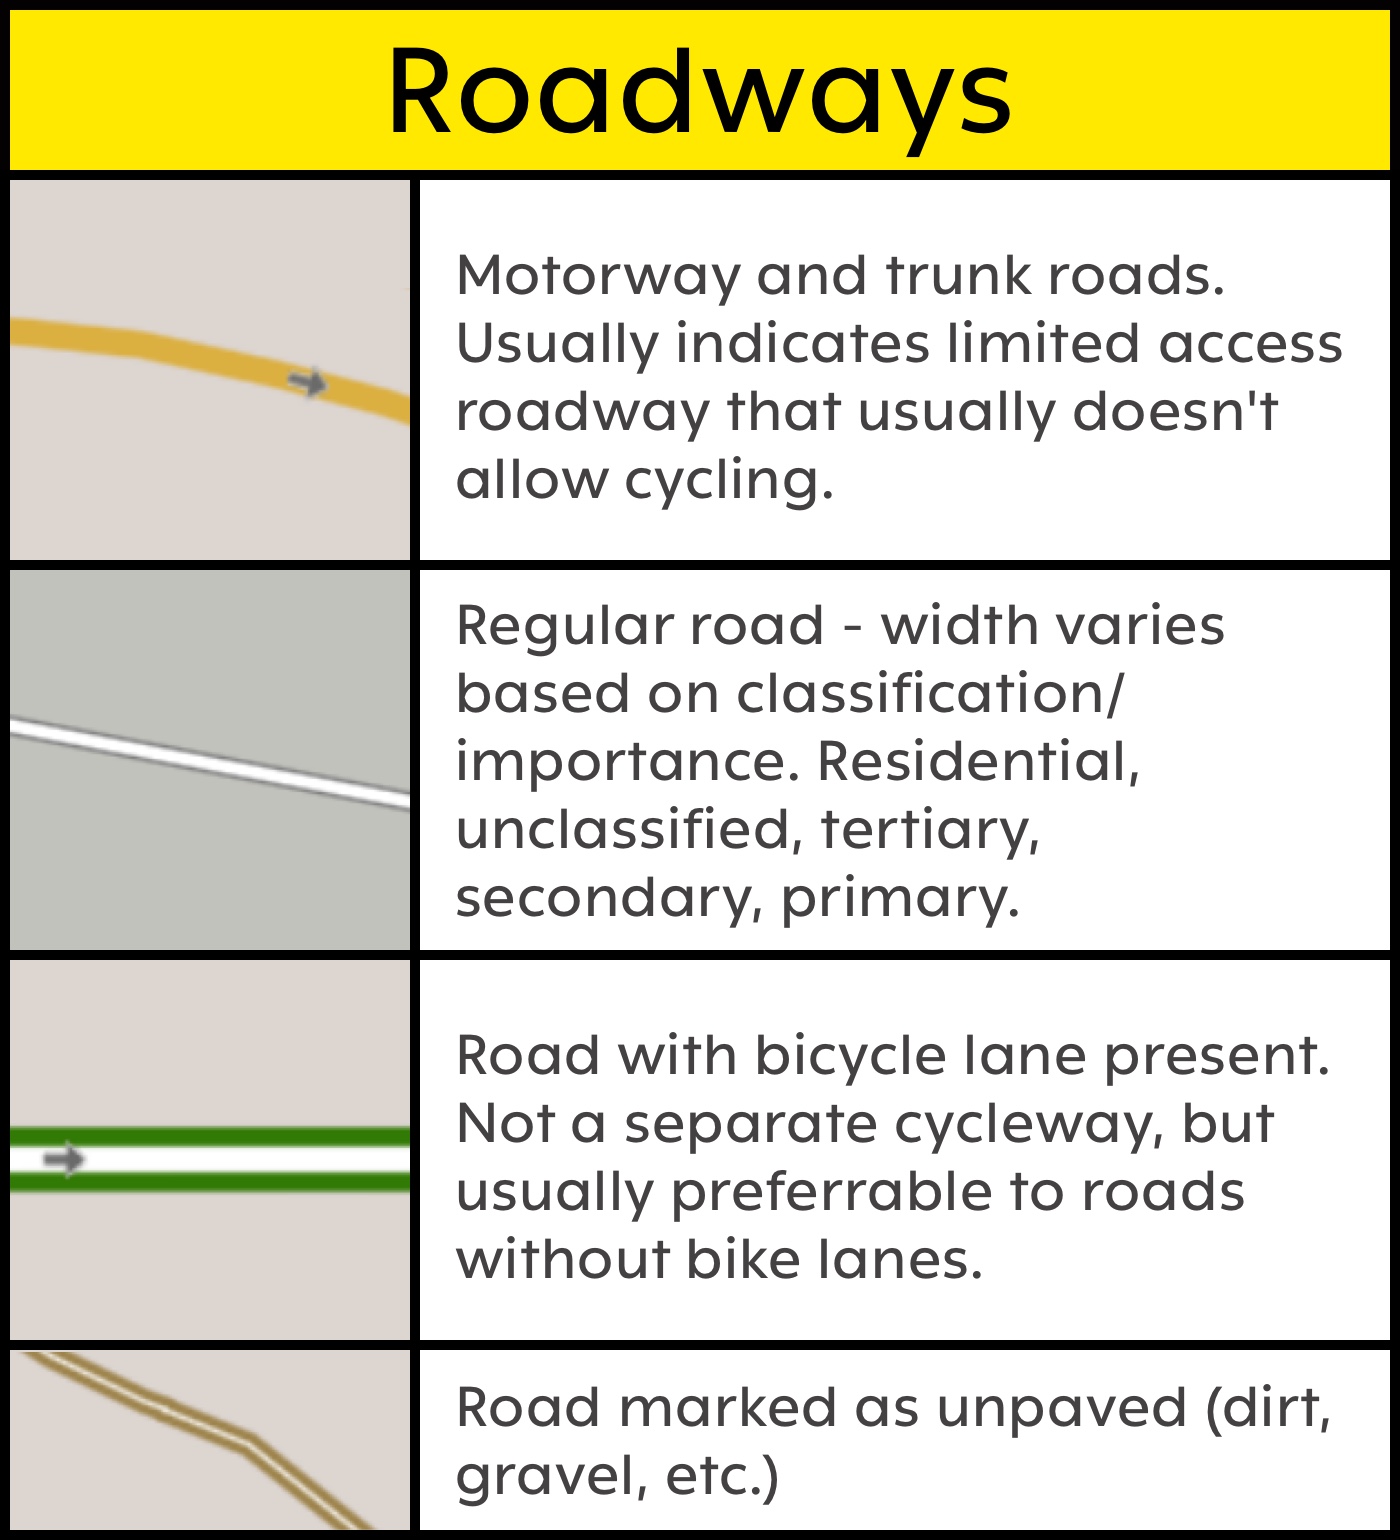 1_-_Roadways.jpg